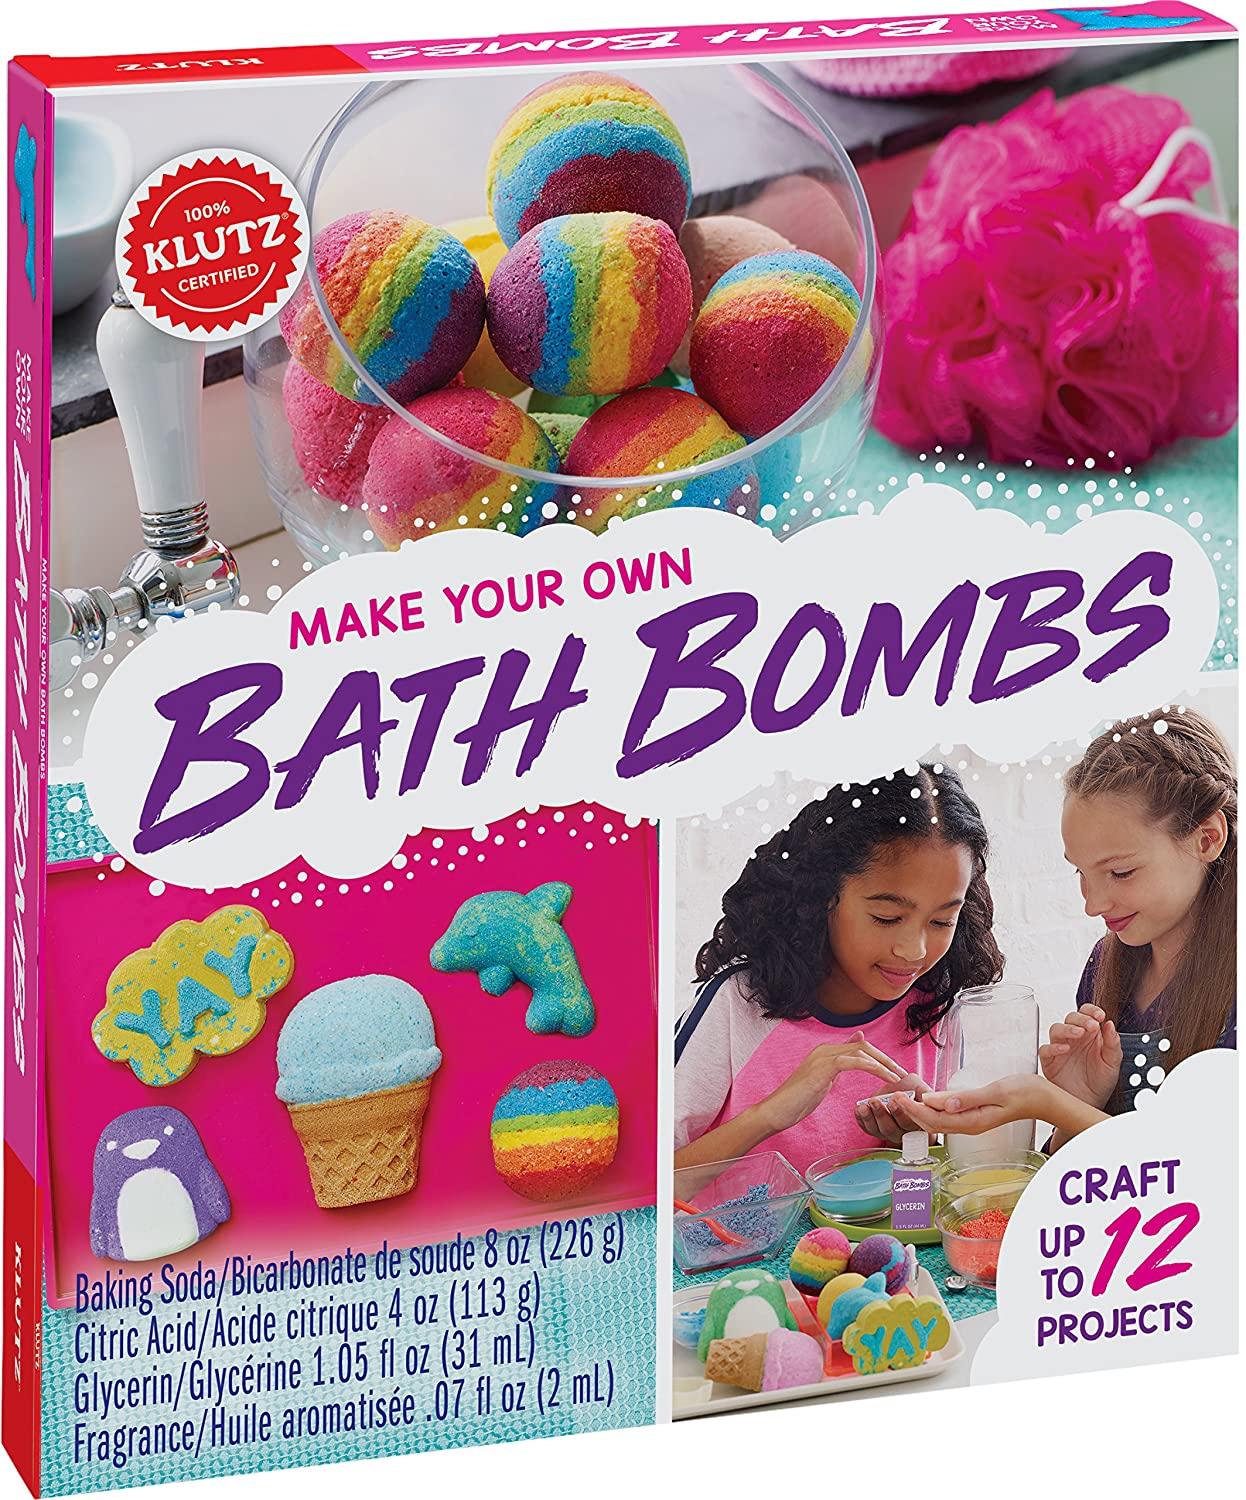 Klutz Strawberry Bath Bombs Craft For Girls 8-12